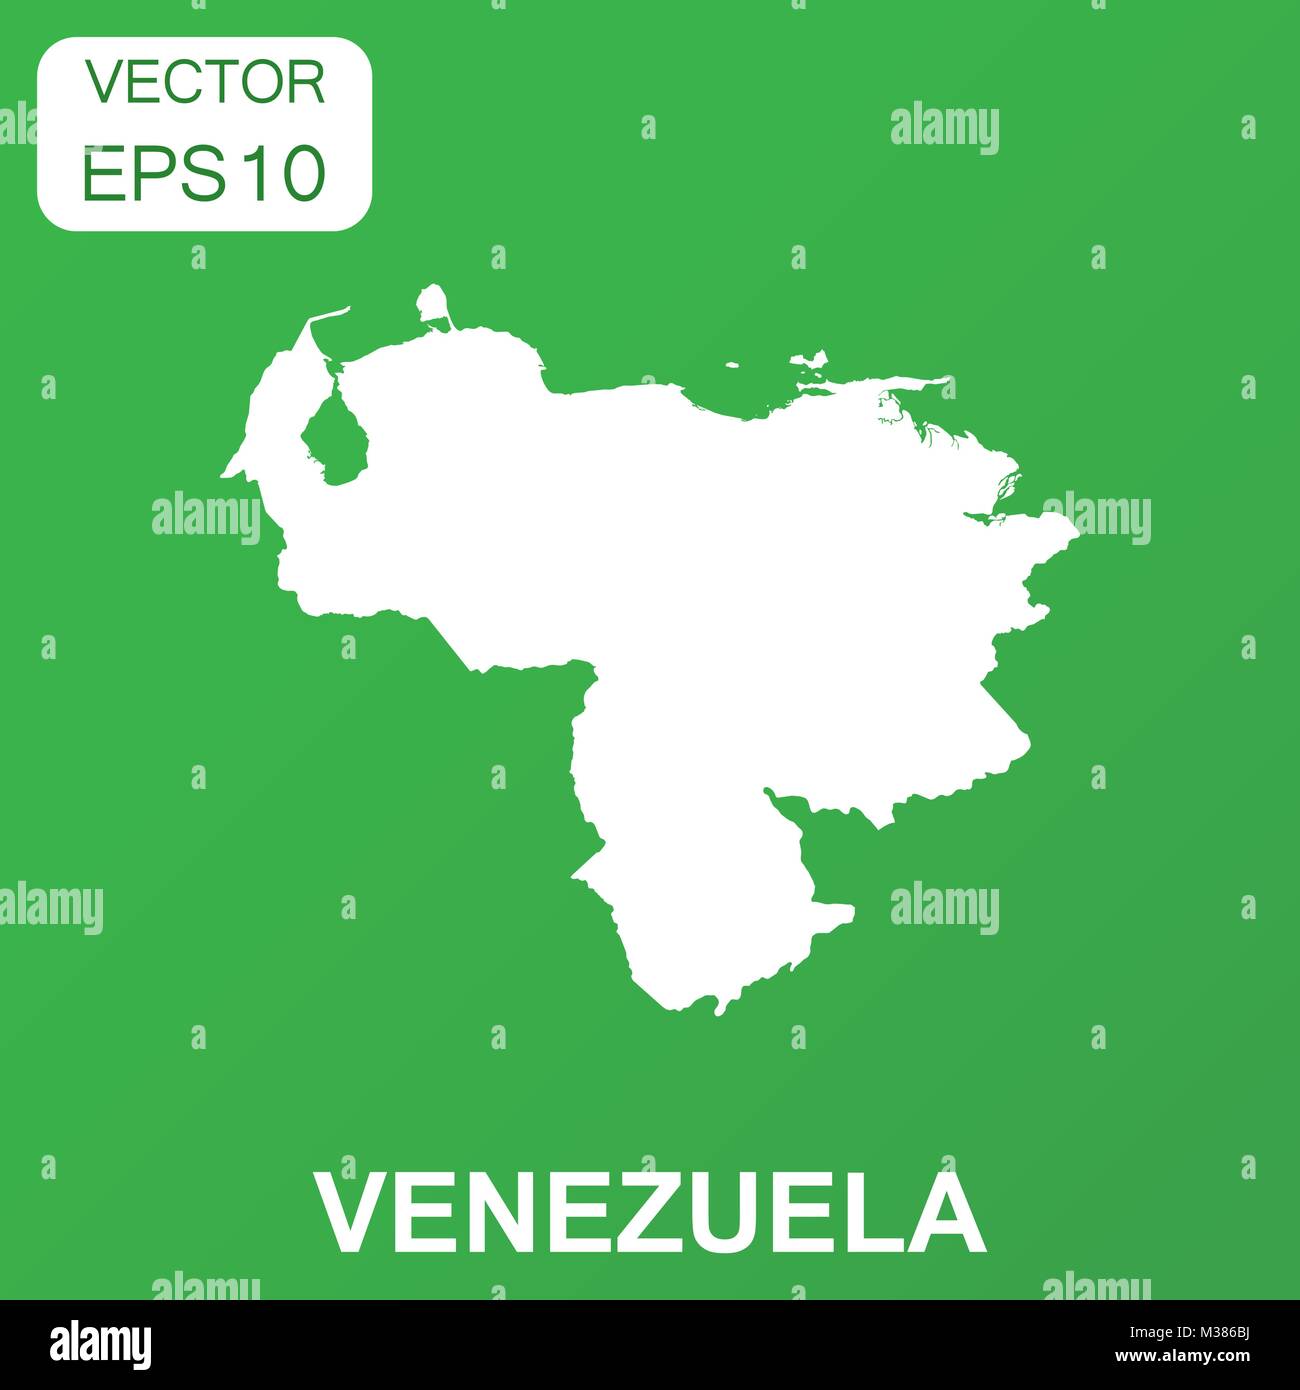 Venezuela map icon. Business concept Venezuela pictogram. Vector illustration on green background. Stock Vector